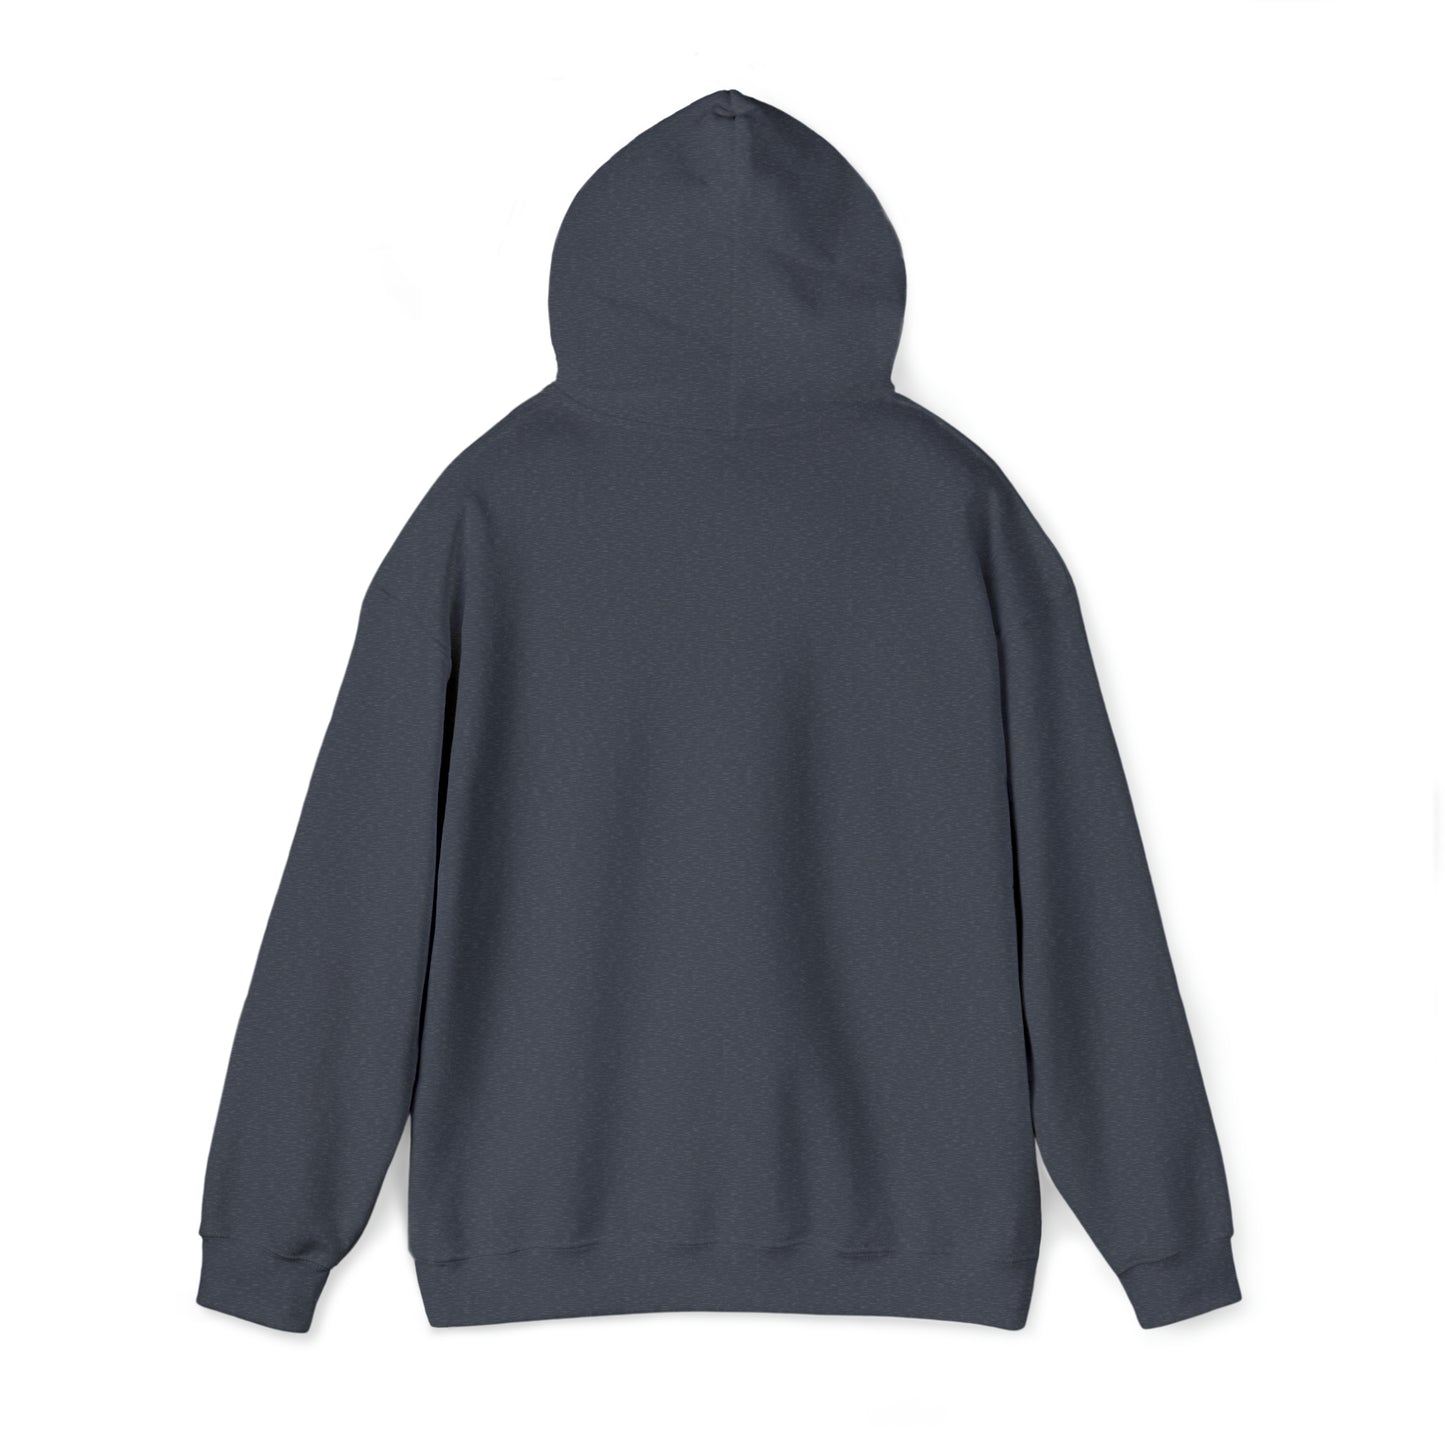 Chosen | Hooded Sweatshirt